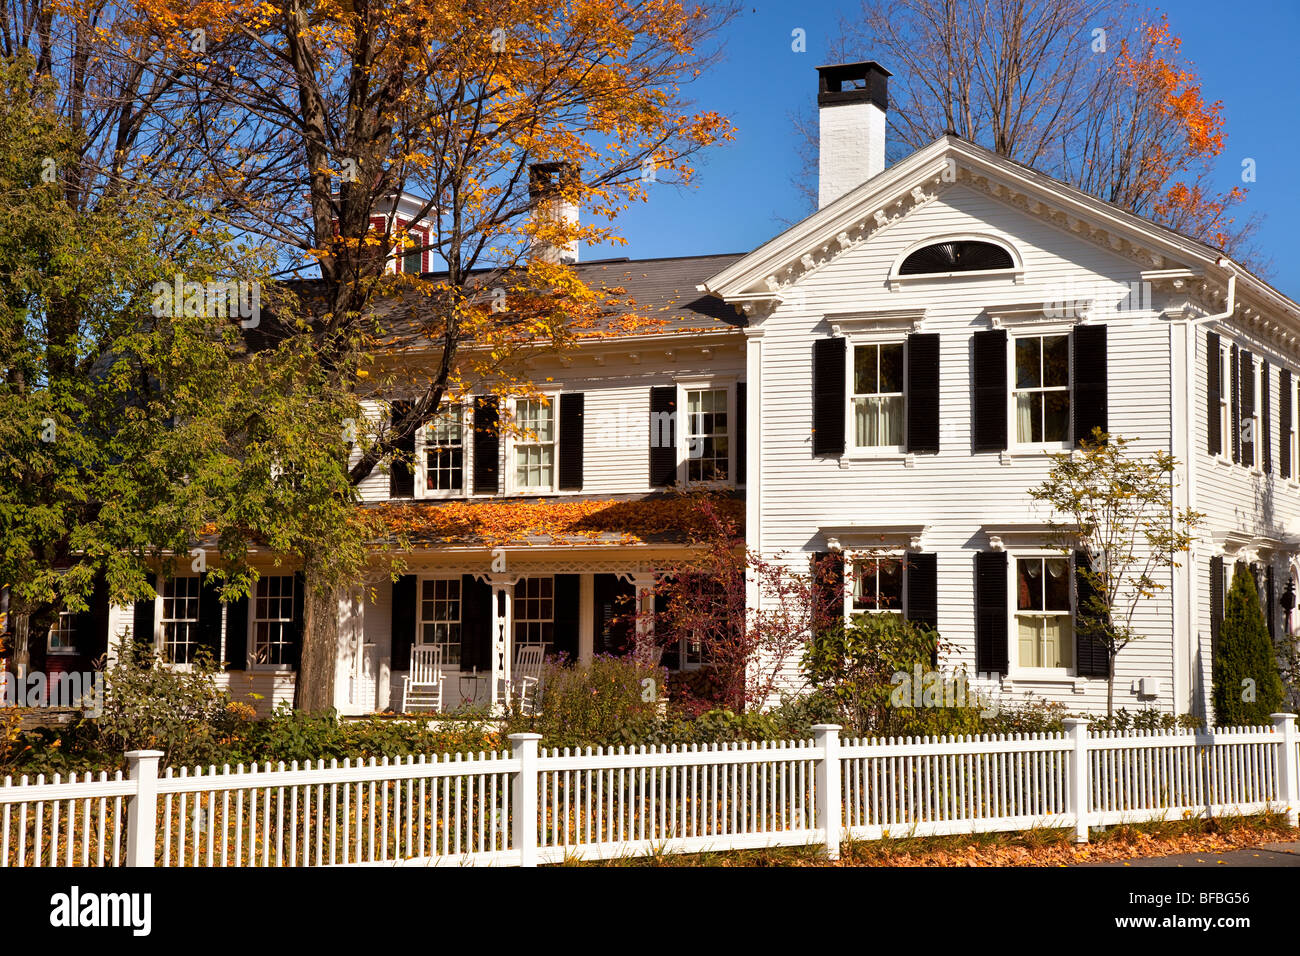 Colonial House en automne - Woodstock Vermont USA Banque D'Images